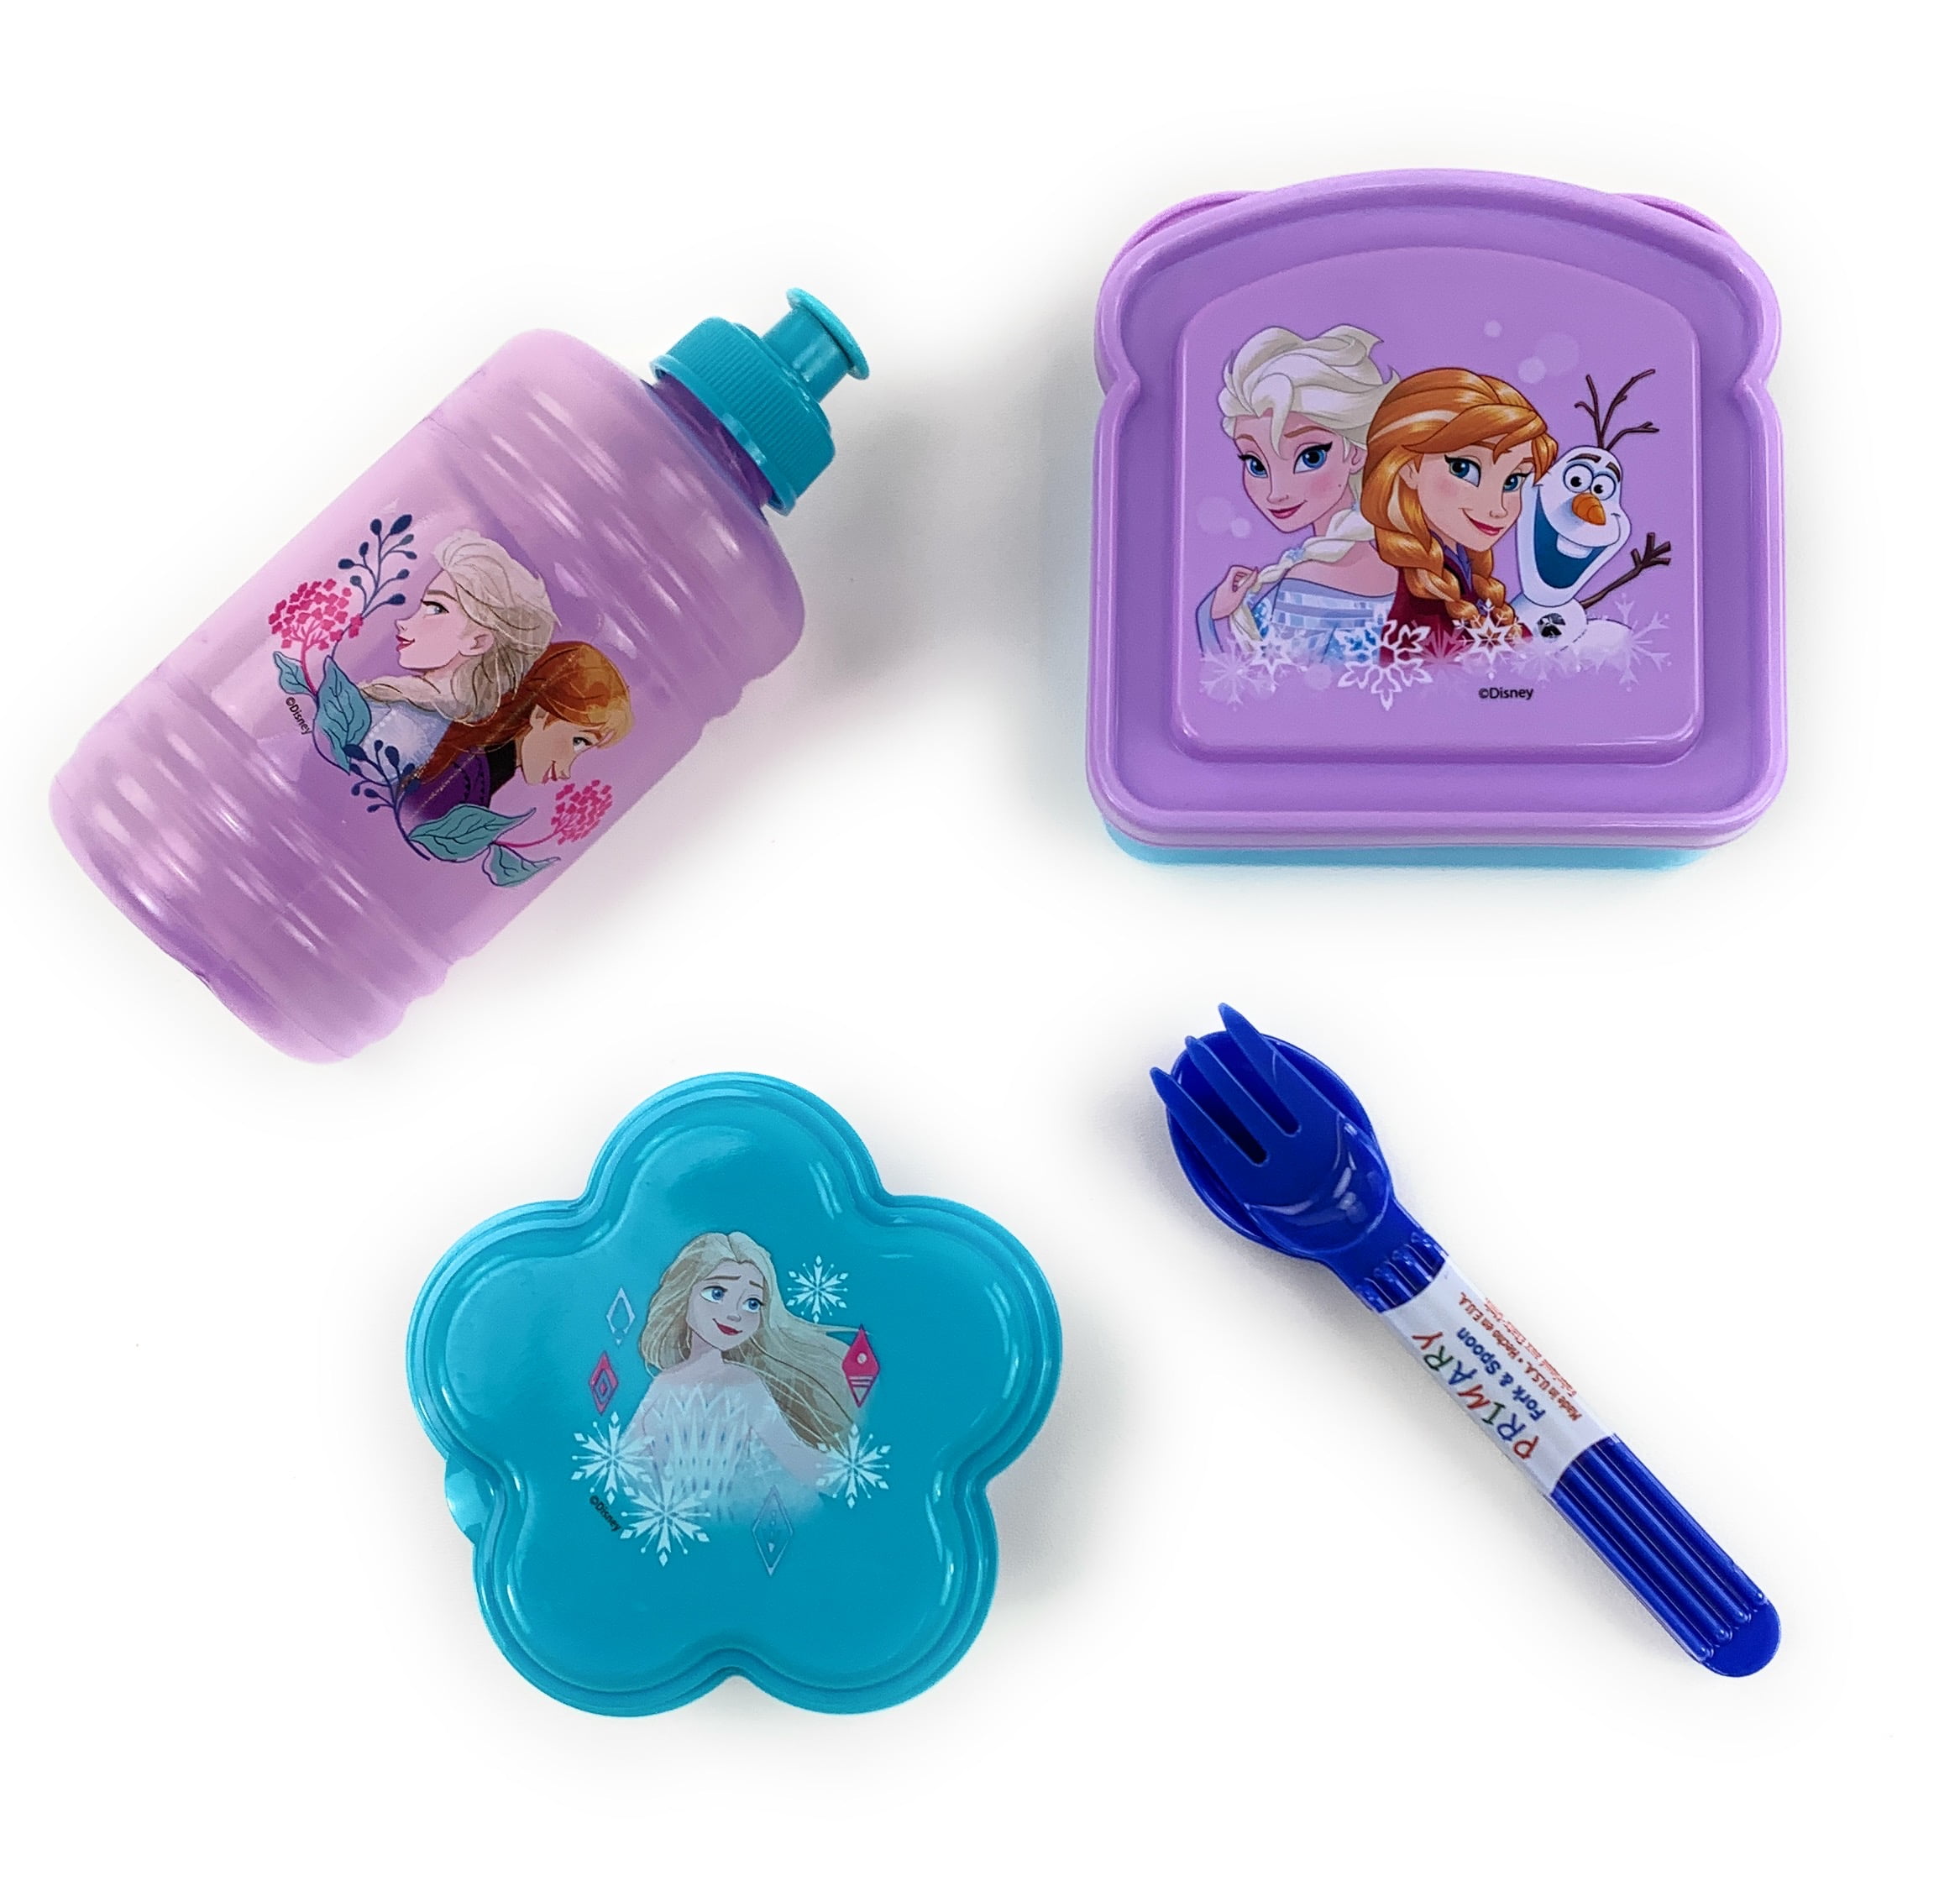 Disney Frozen Lunch Box Set Includes Sandwich Snack Container Water Bottle Tableware Featuring Elsa Anna Zak Designs 4 Piece Kids Picnic Pack Tote Ba 3ca7444c 3f15 4763 b2ba c2509f372b22.0fdb7ff1c9ba51c677b658ebce8beca9